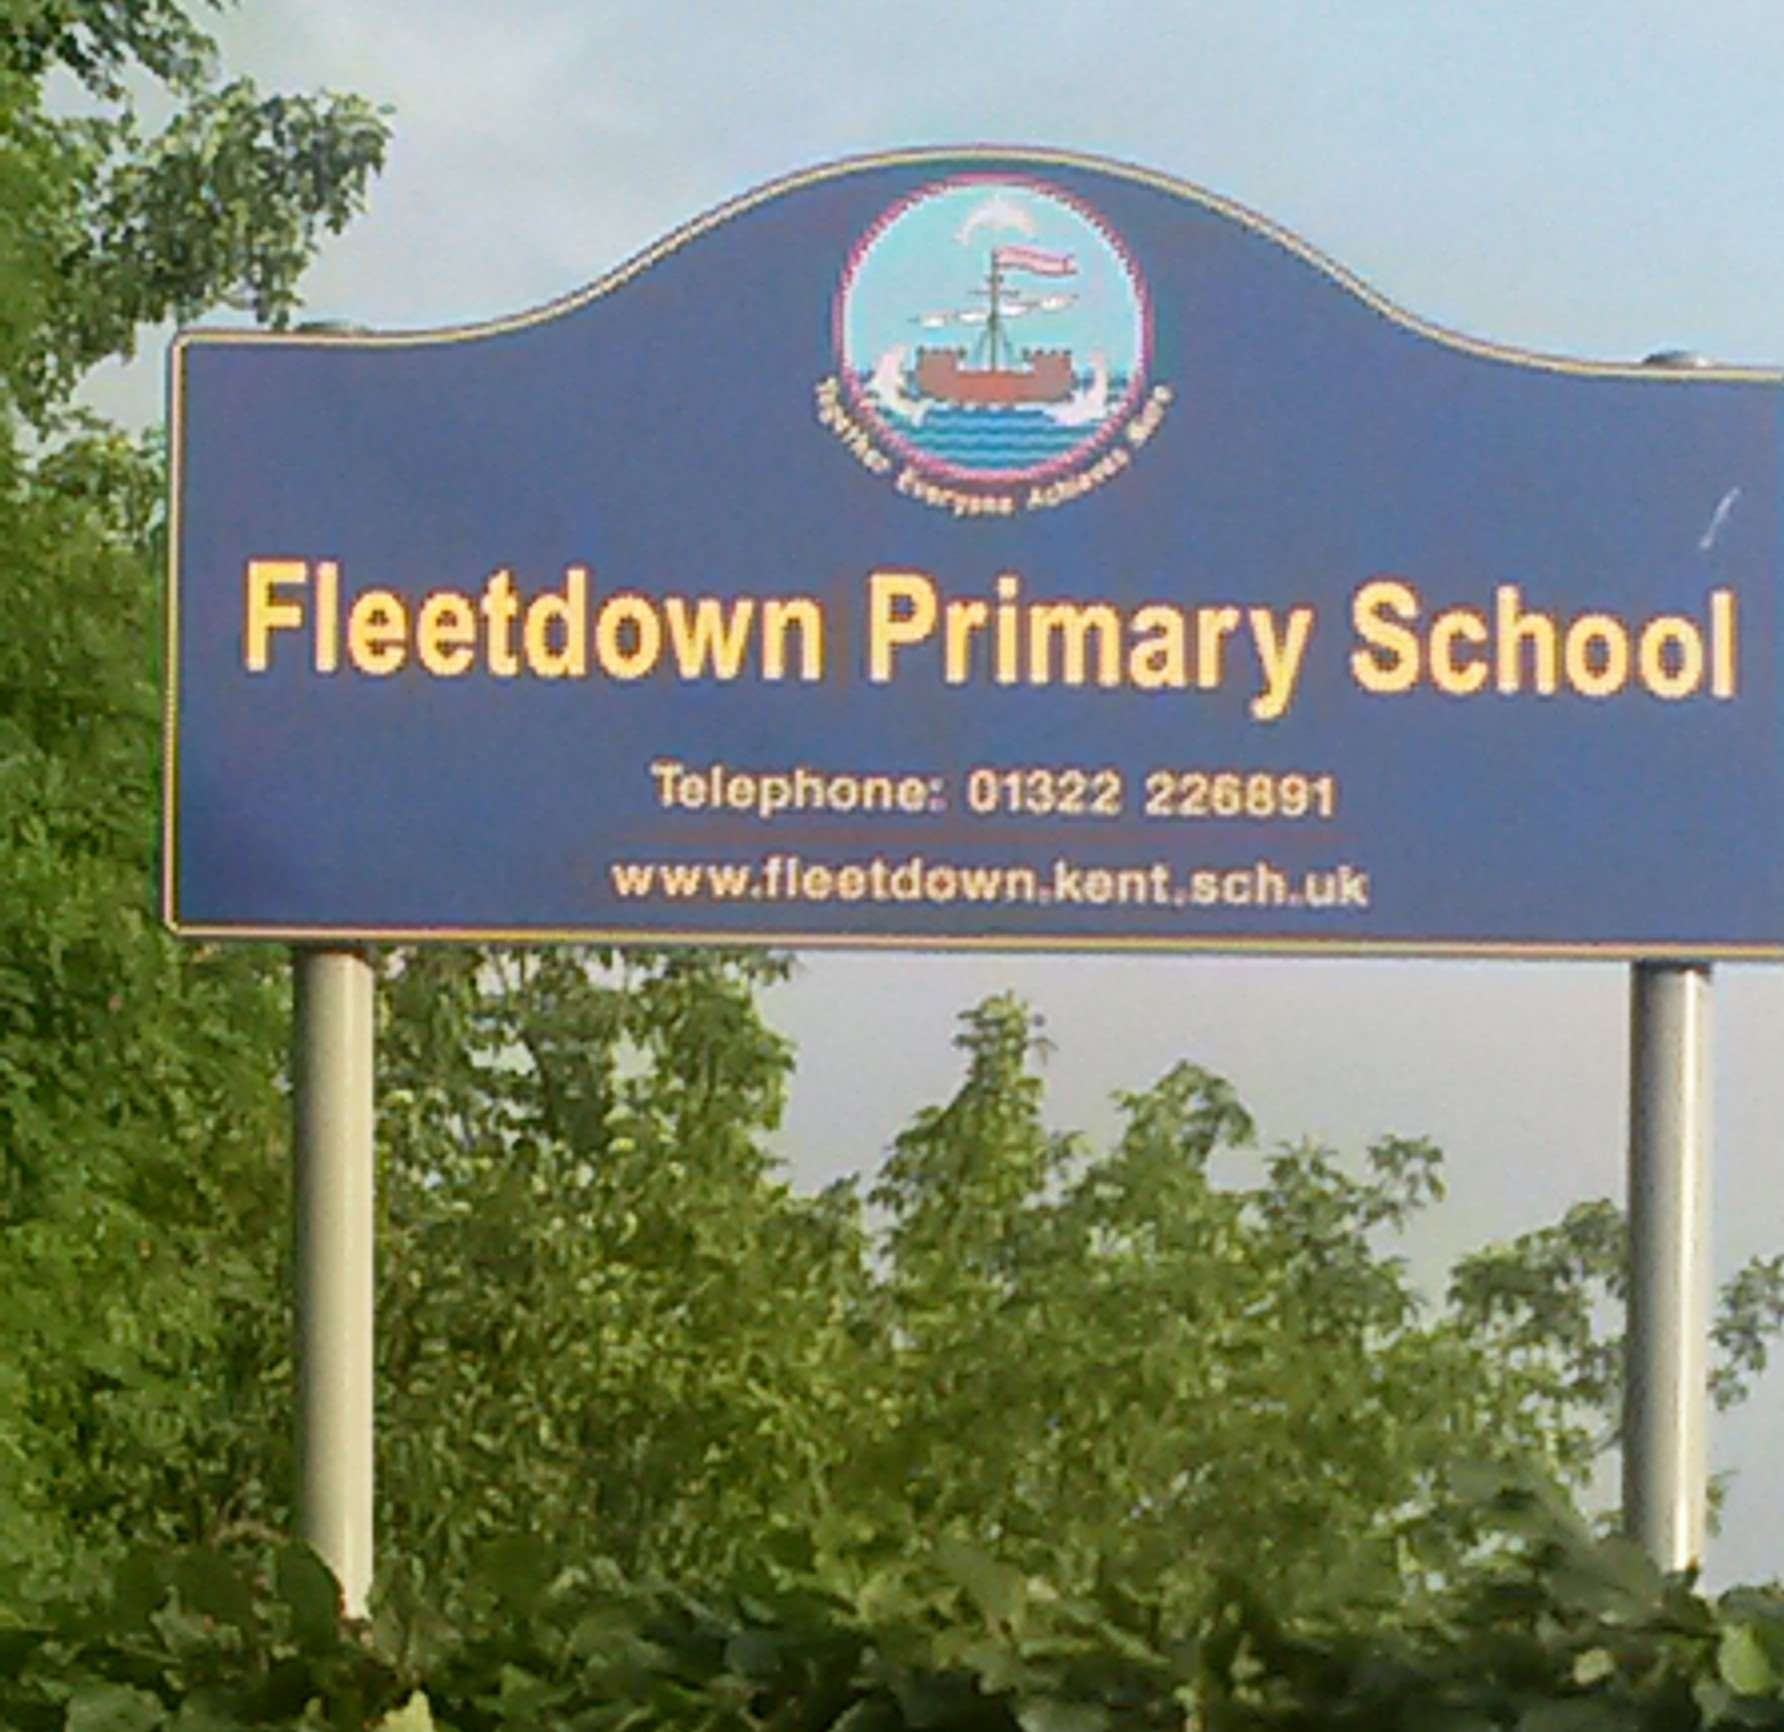 Fleetdown Primary School in Lunedale Road, Dartford